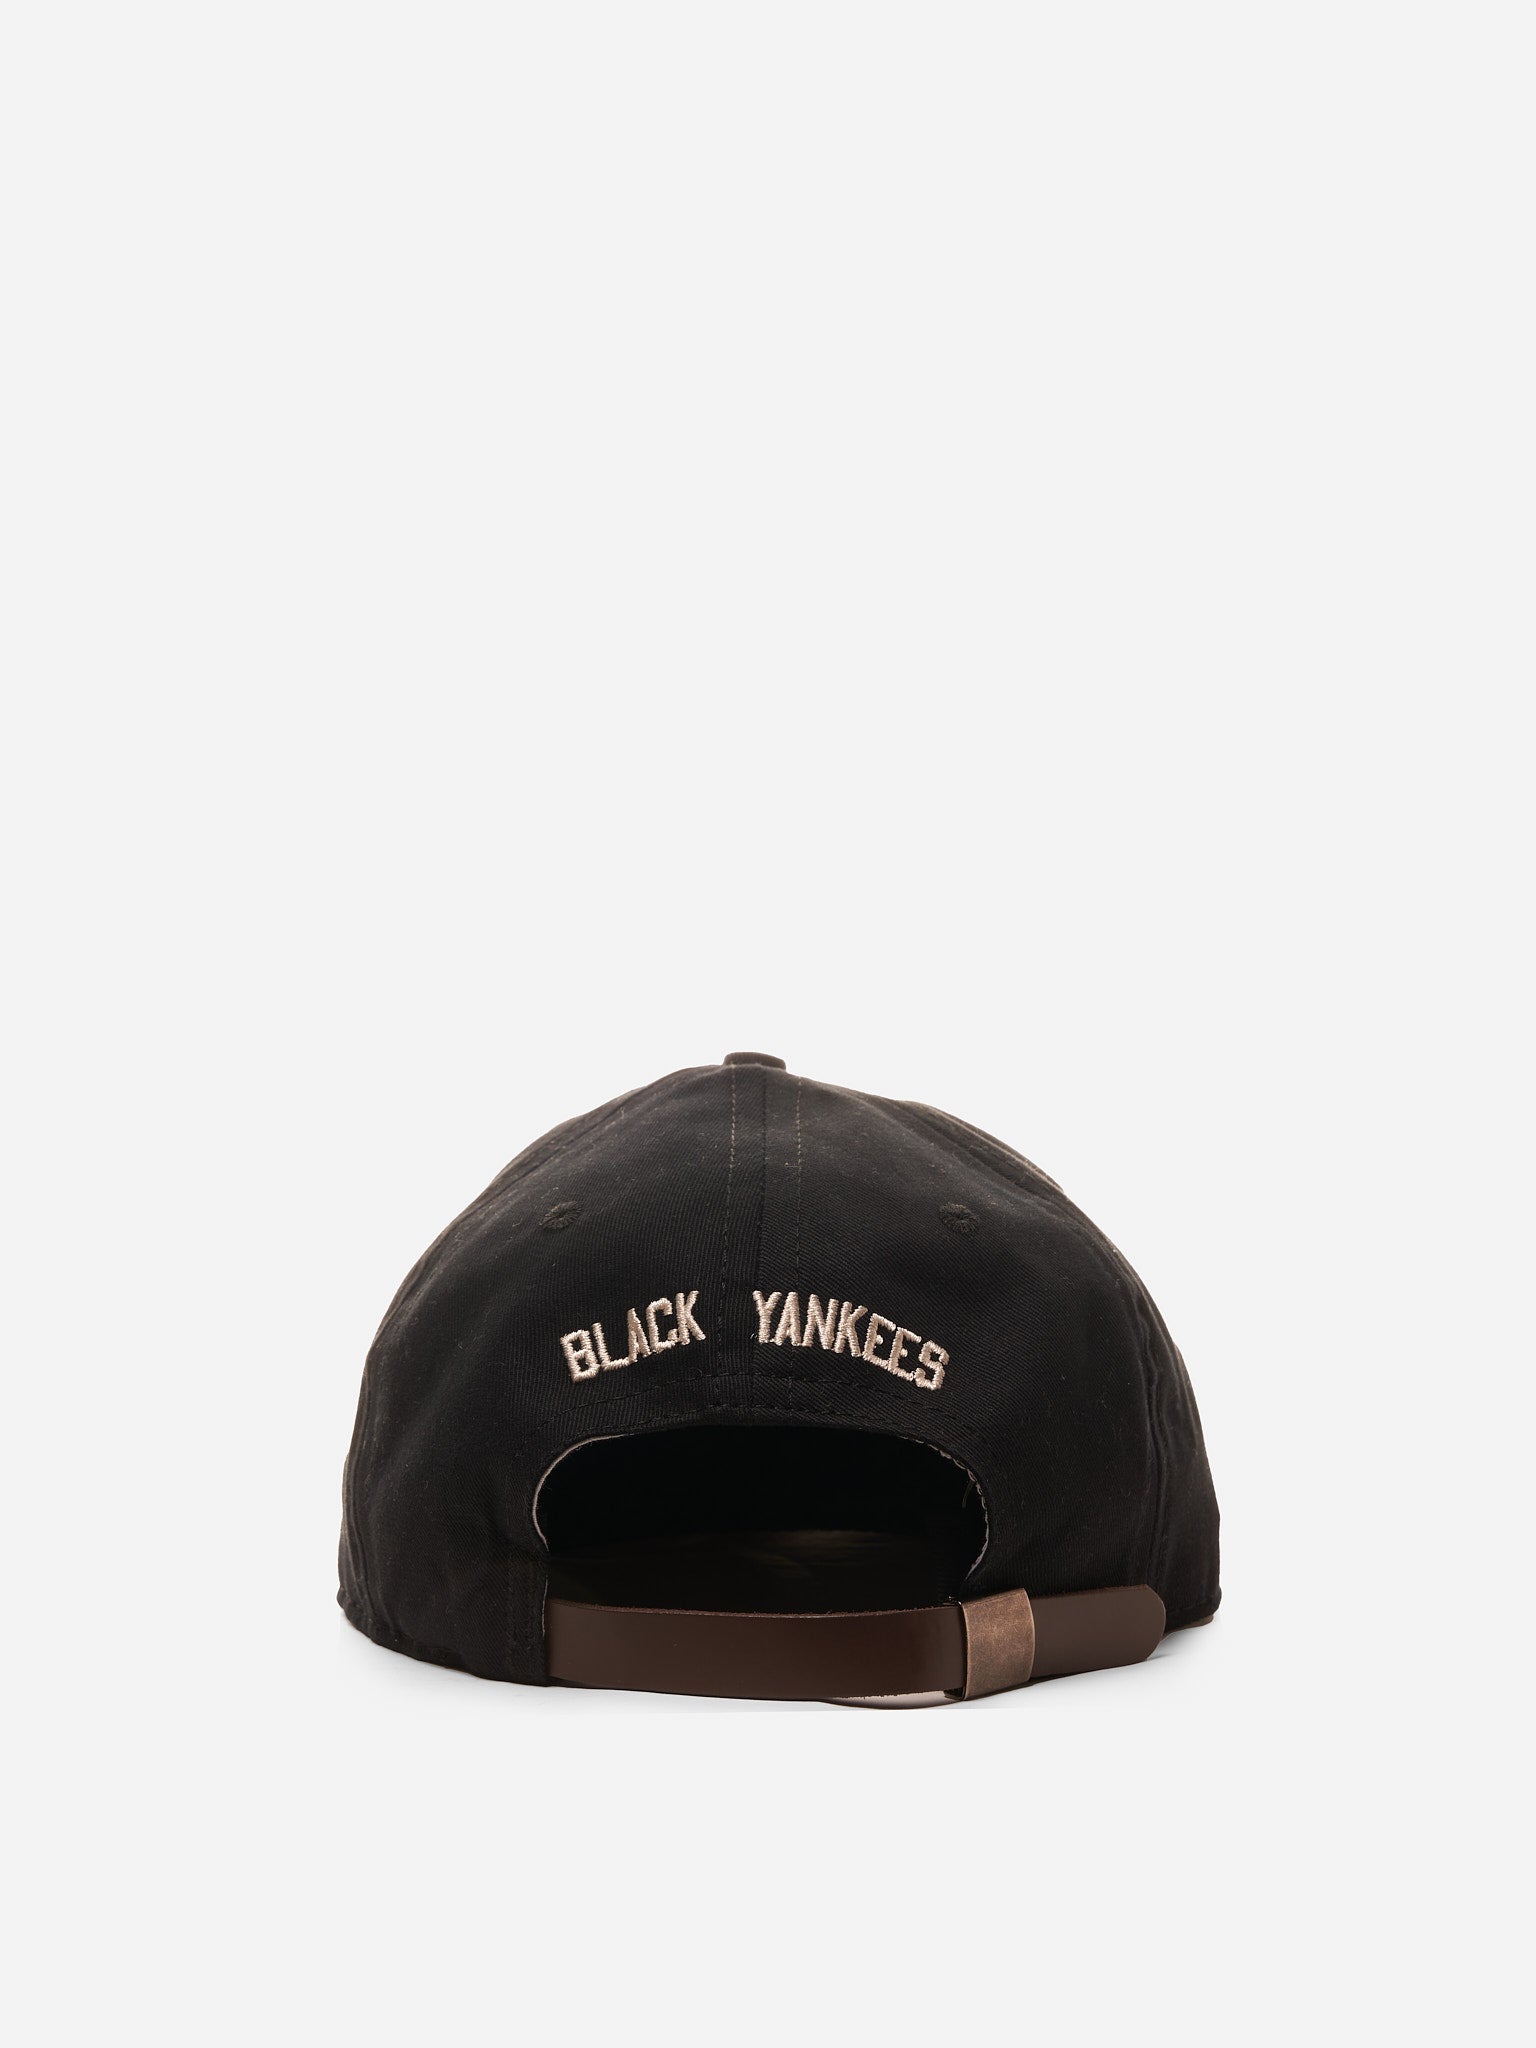 Ebbets Field Flannels New York Black Yankees Vintage Inspired Ballcap